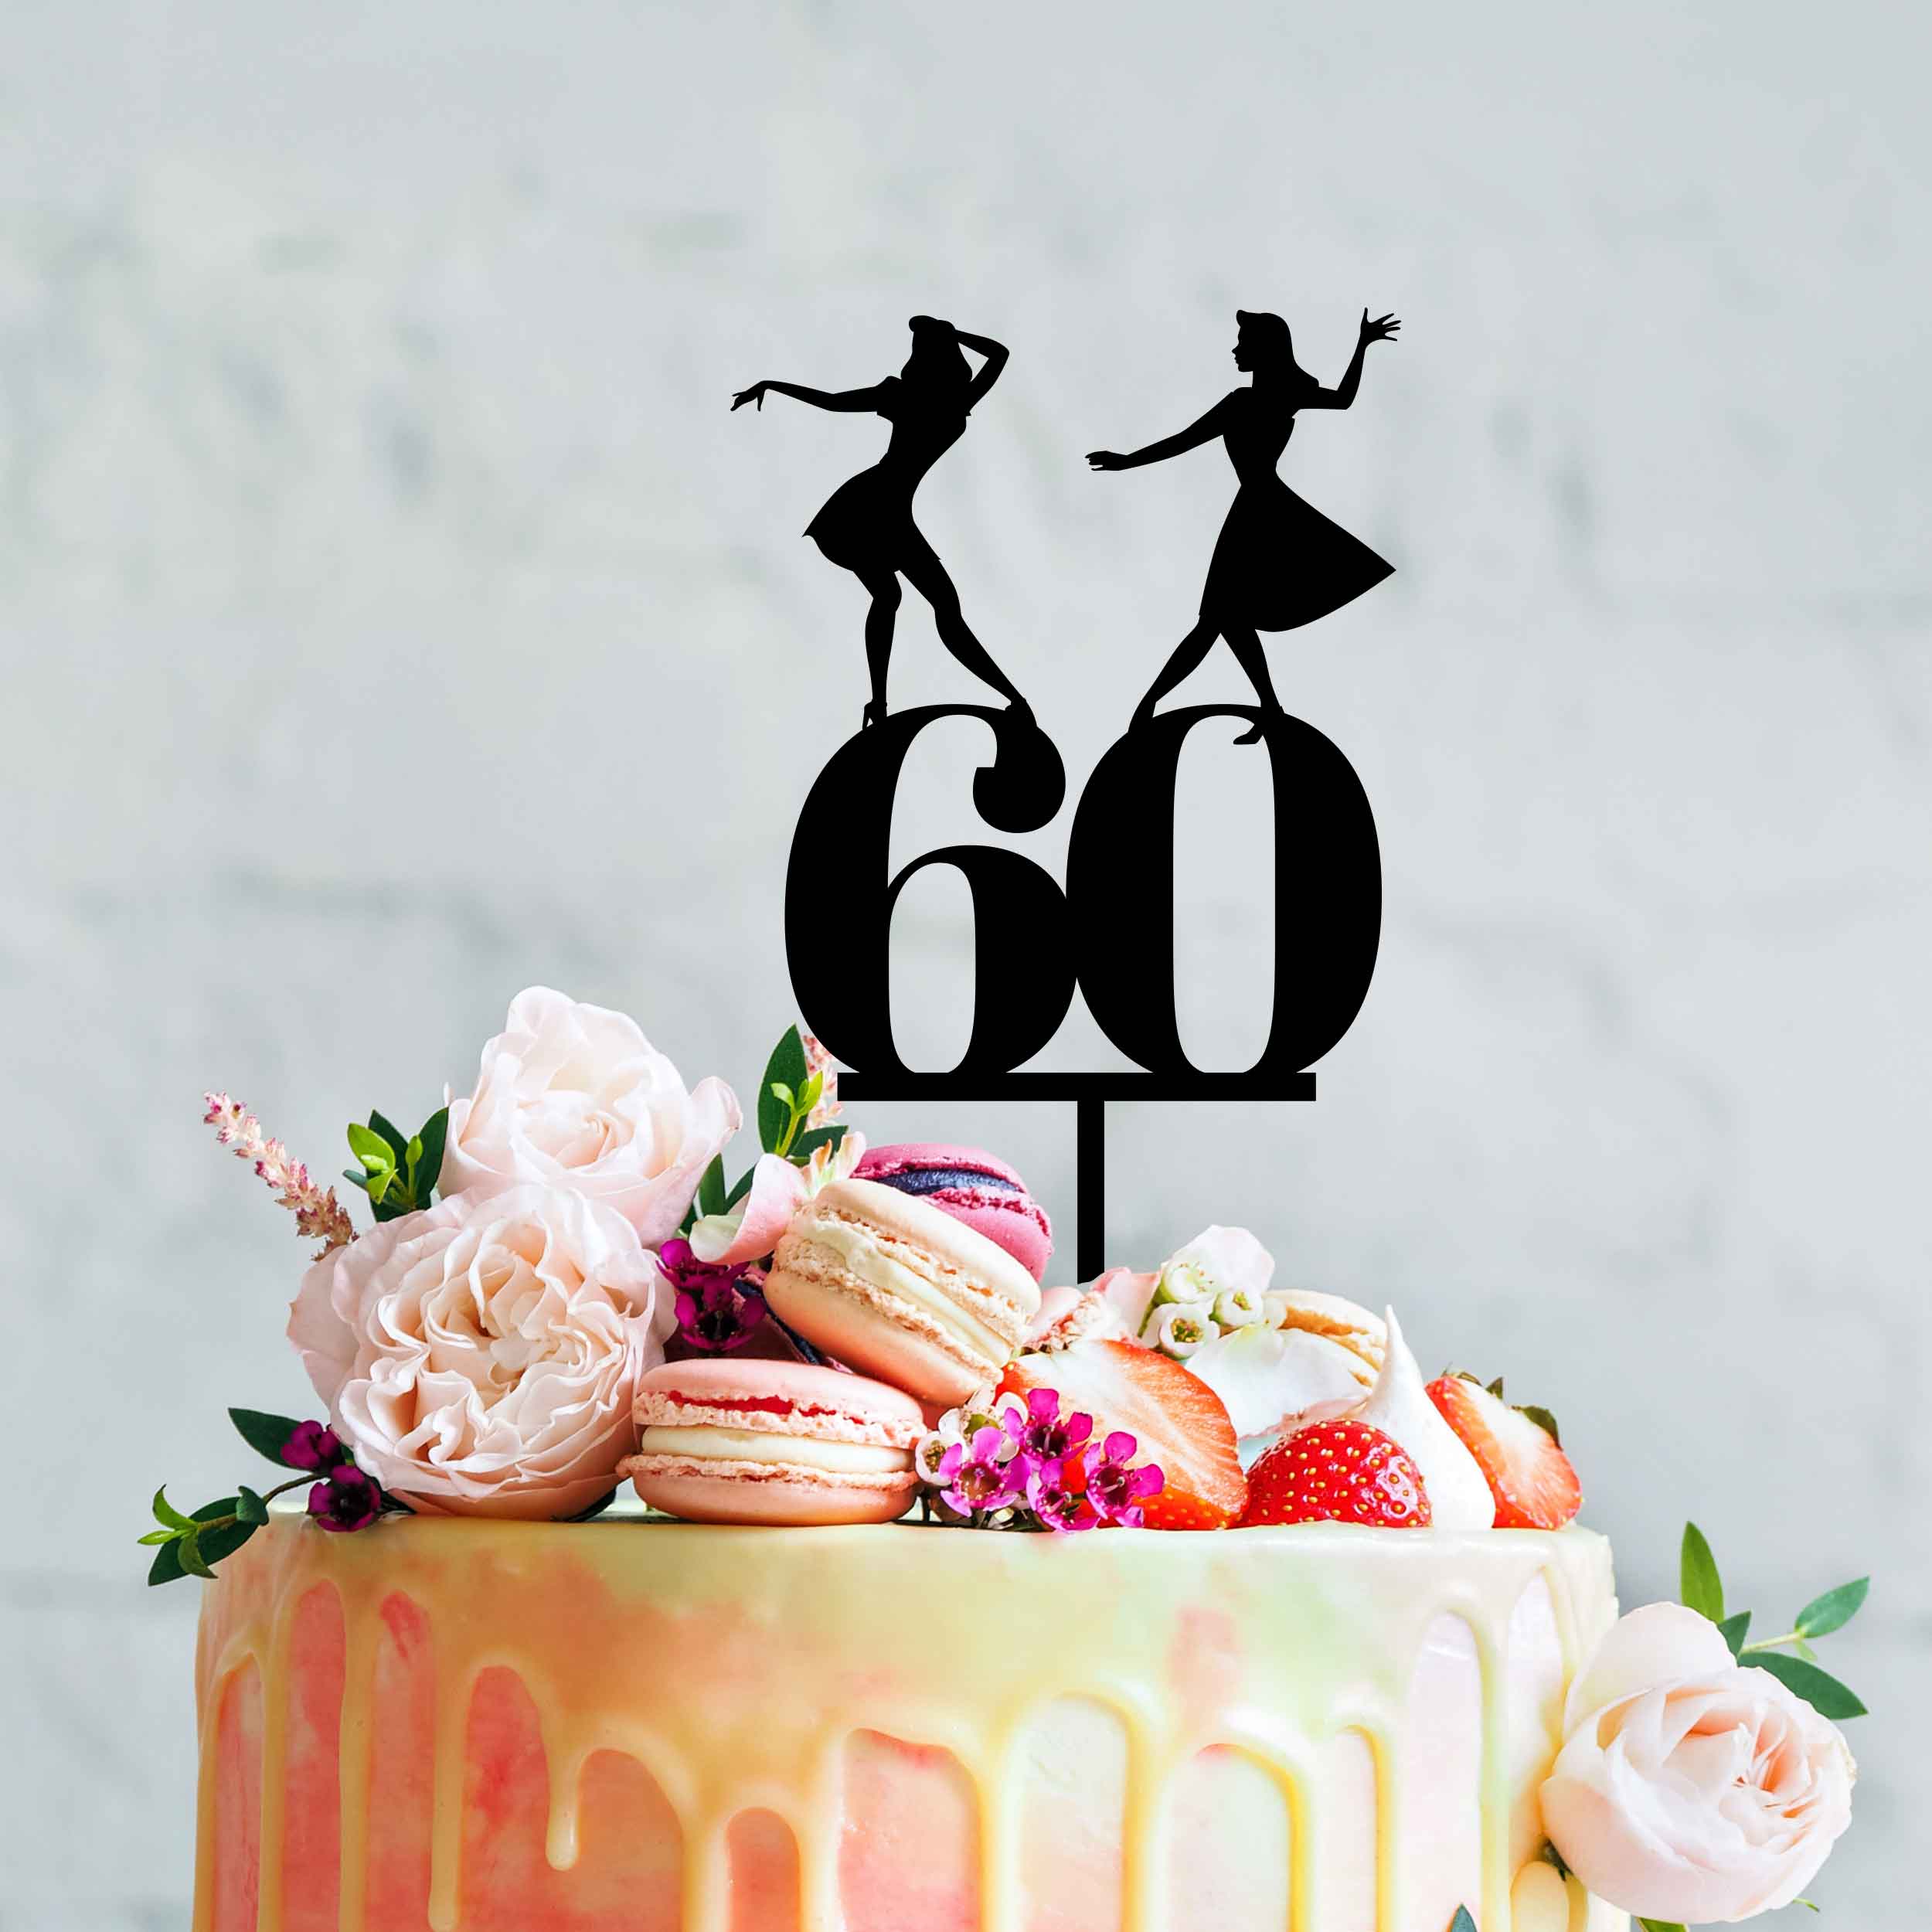 Dancer 16th birthday cake | Dance birthday cake, Dance cakes, Dancer cake